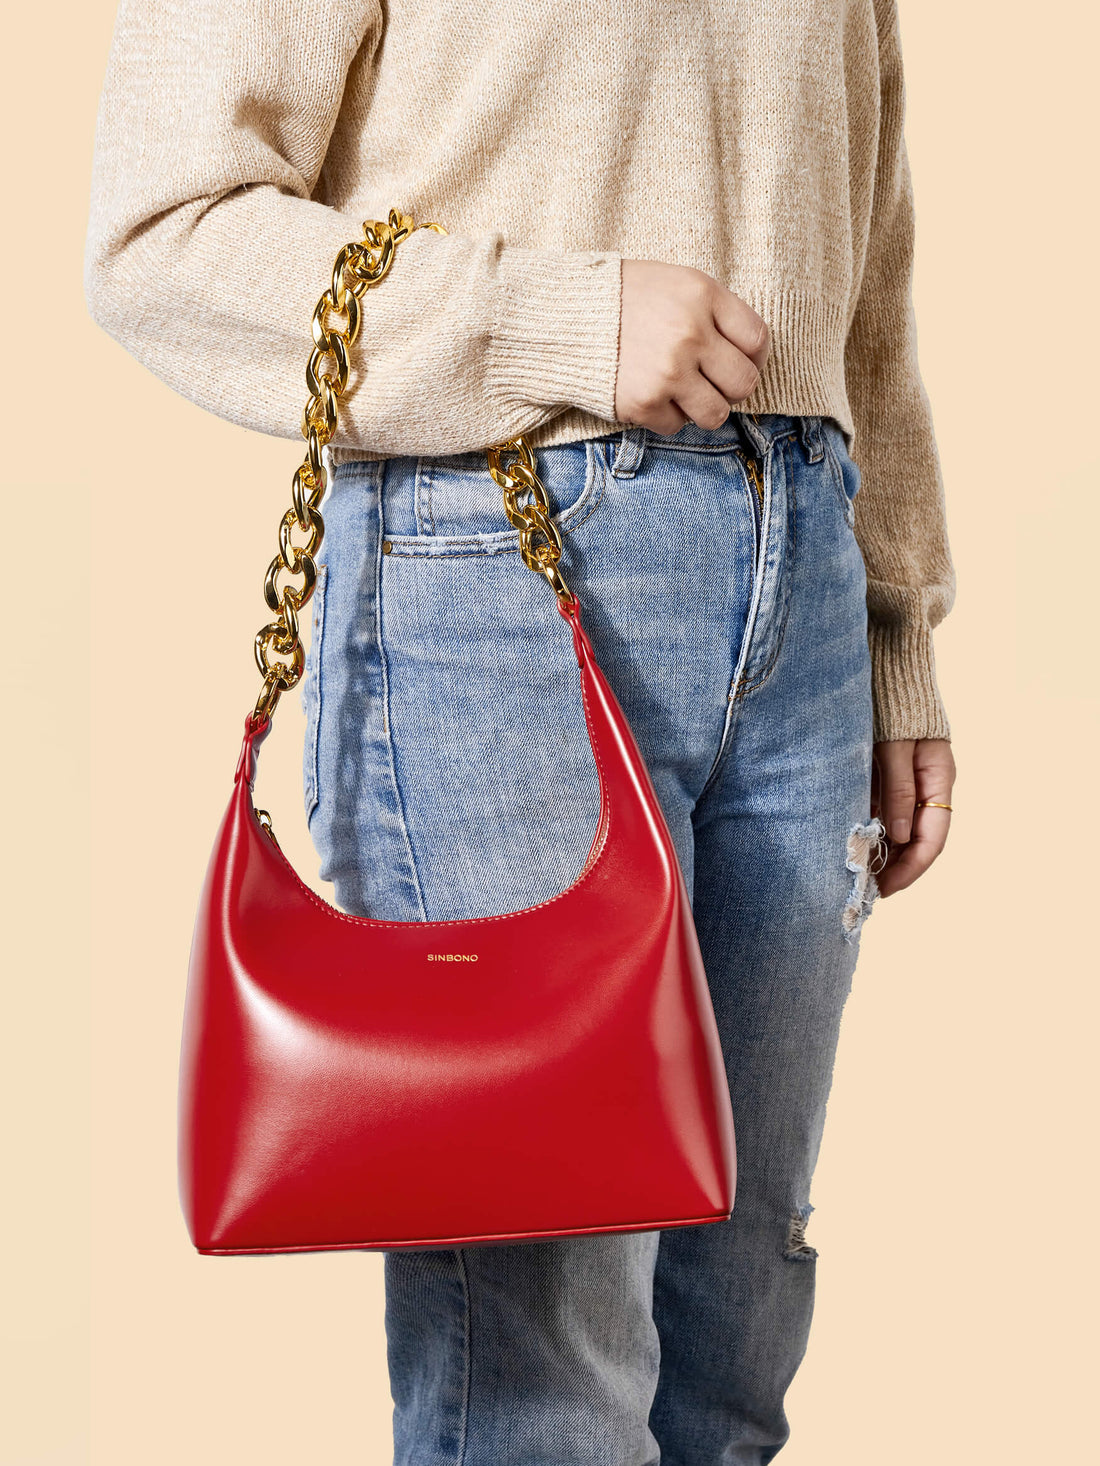 SINBONO Red Shoulder Satchel Crossbody Women's Handbags